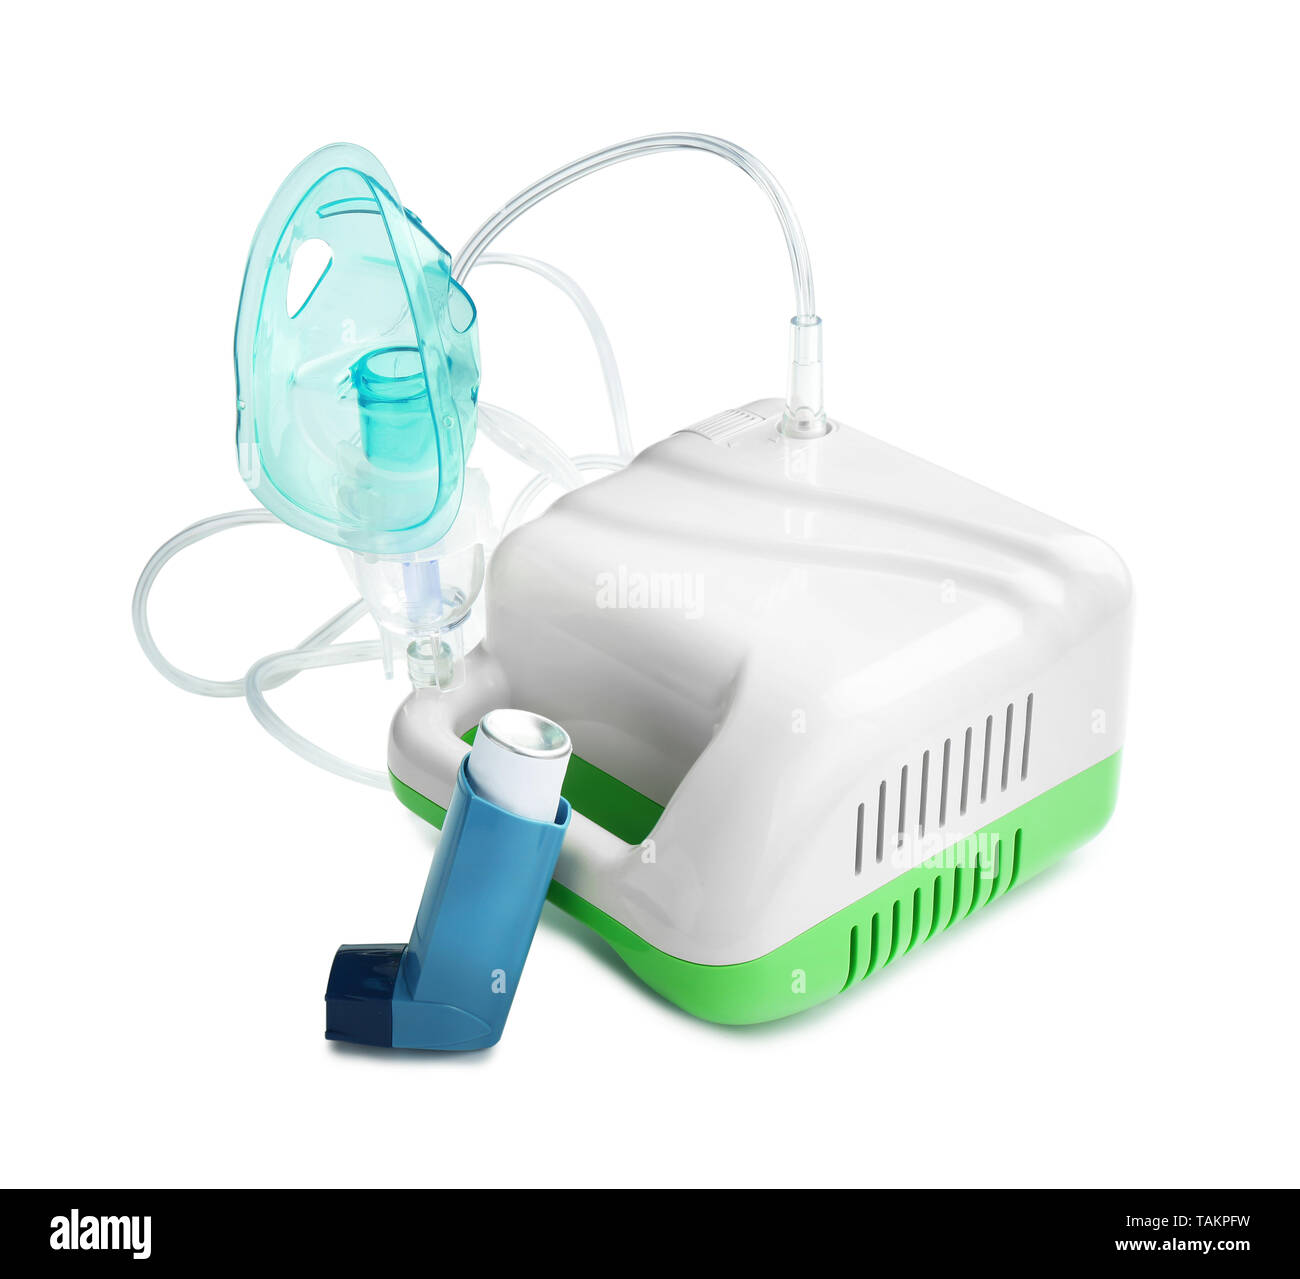 Nebulizer and inhaler on white background Stock Photo - Alamy